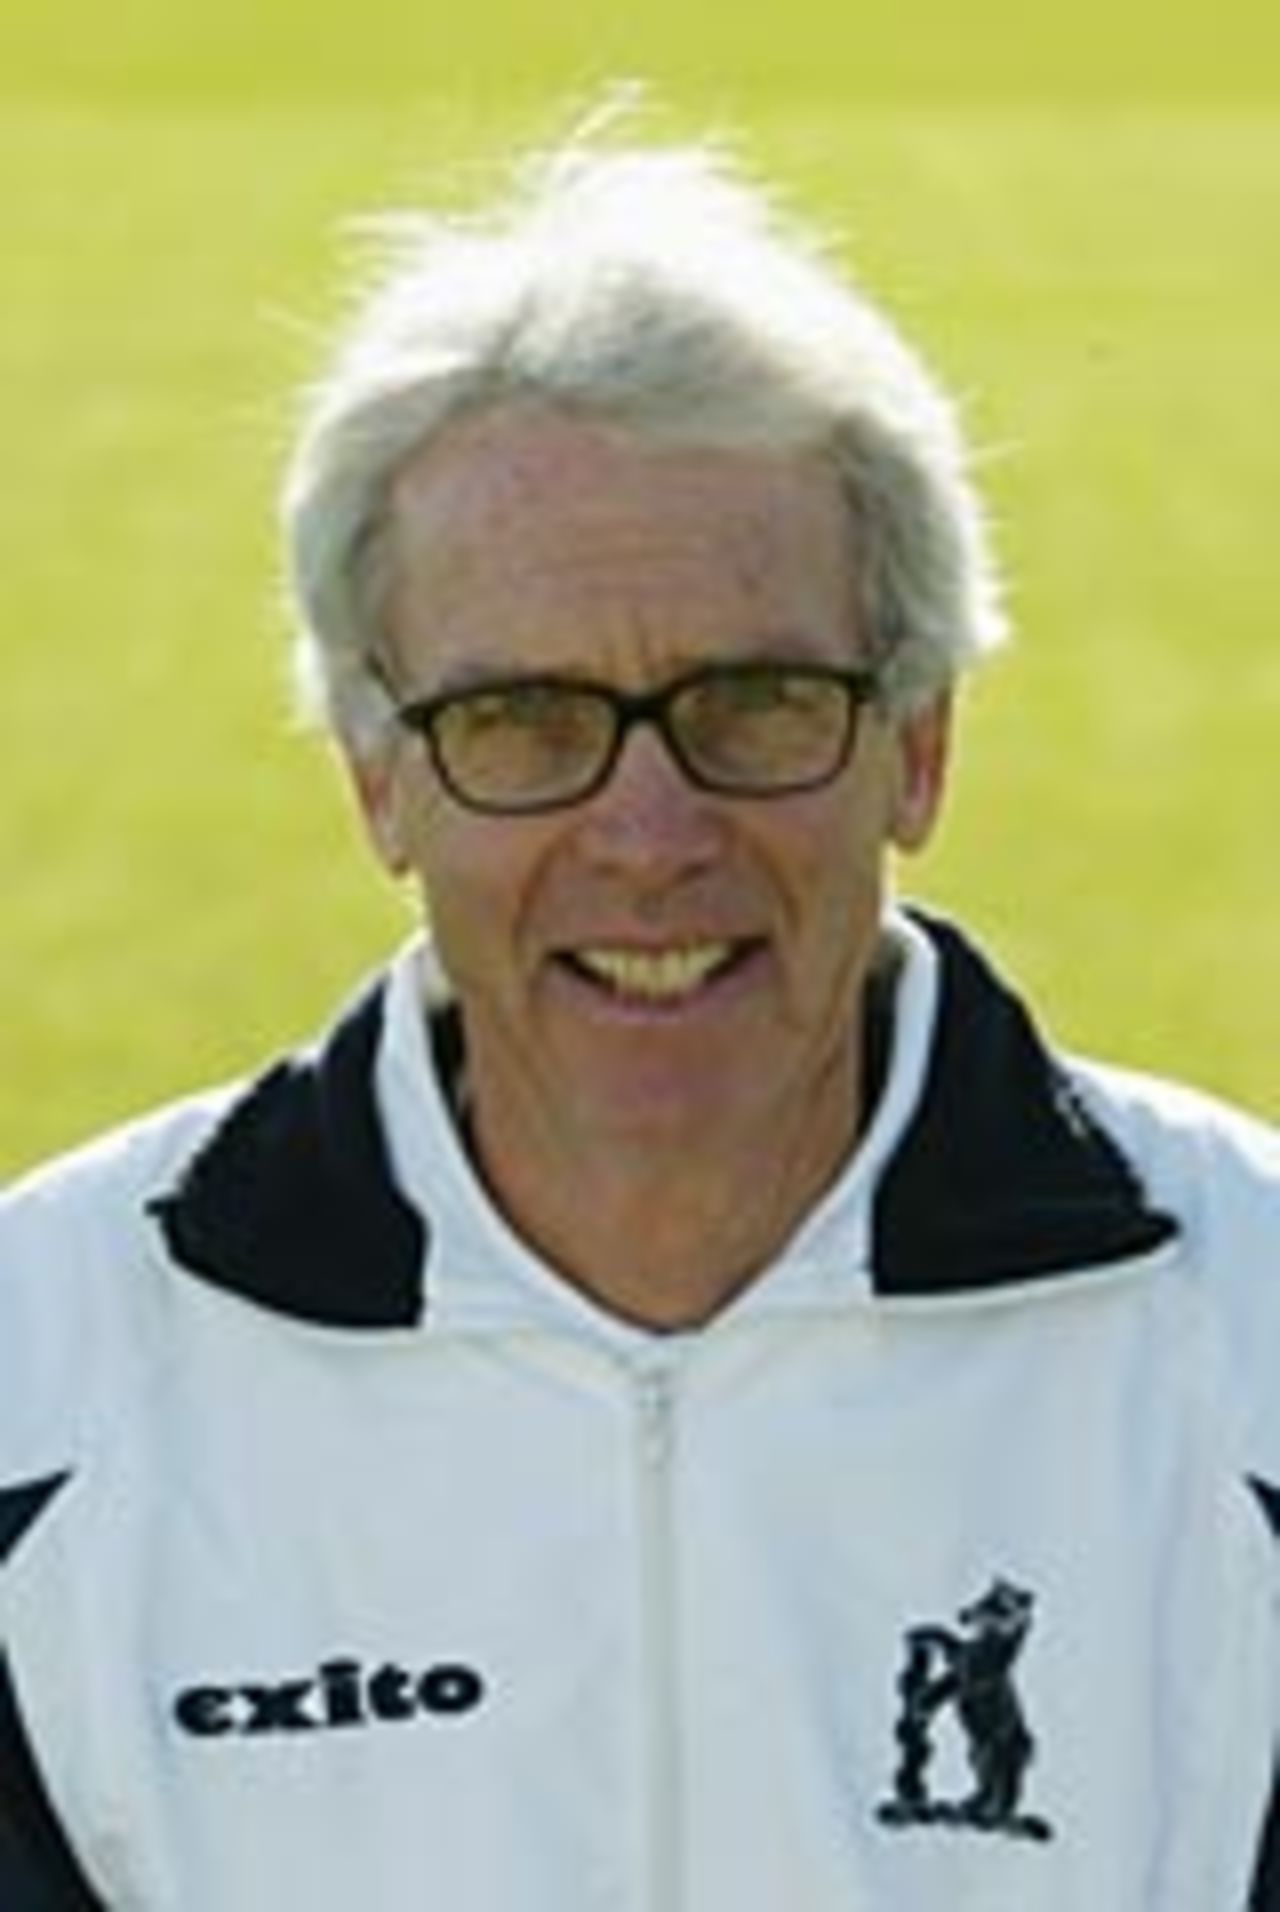 John Inverarity, Warwickshire's coach